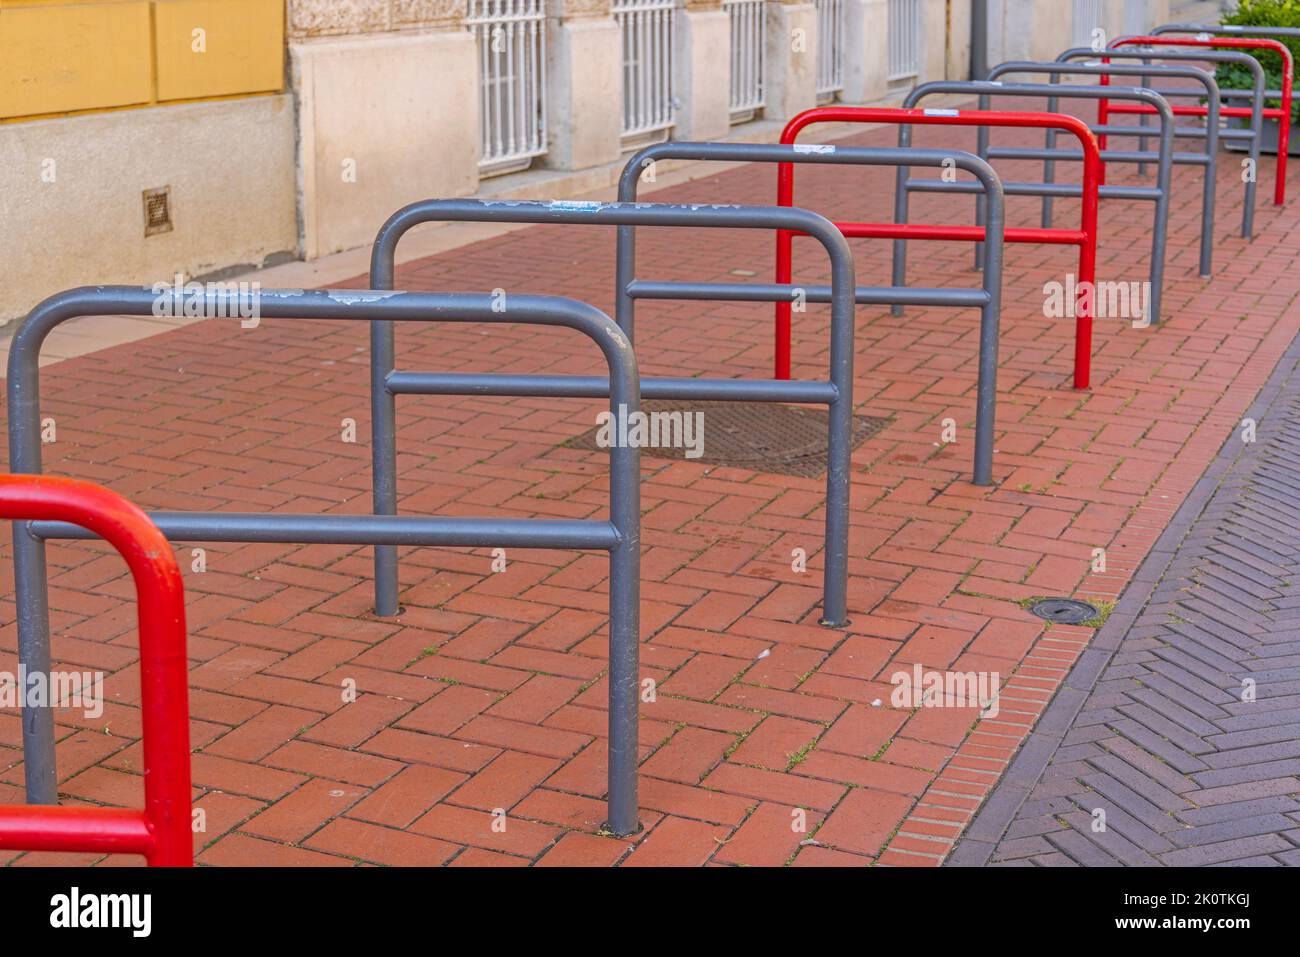 Empty Bicycle Parking Racks Poles Bollards in City Stock Photo